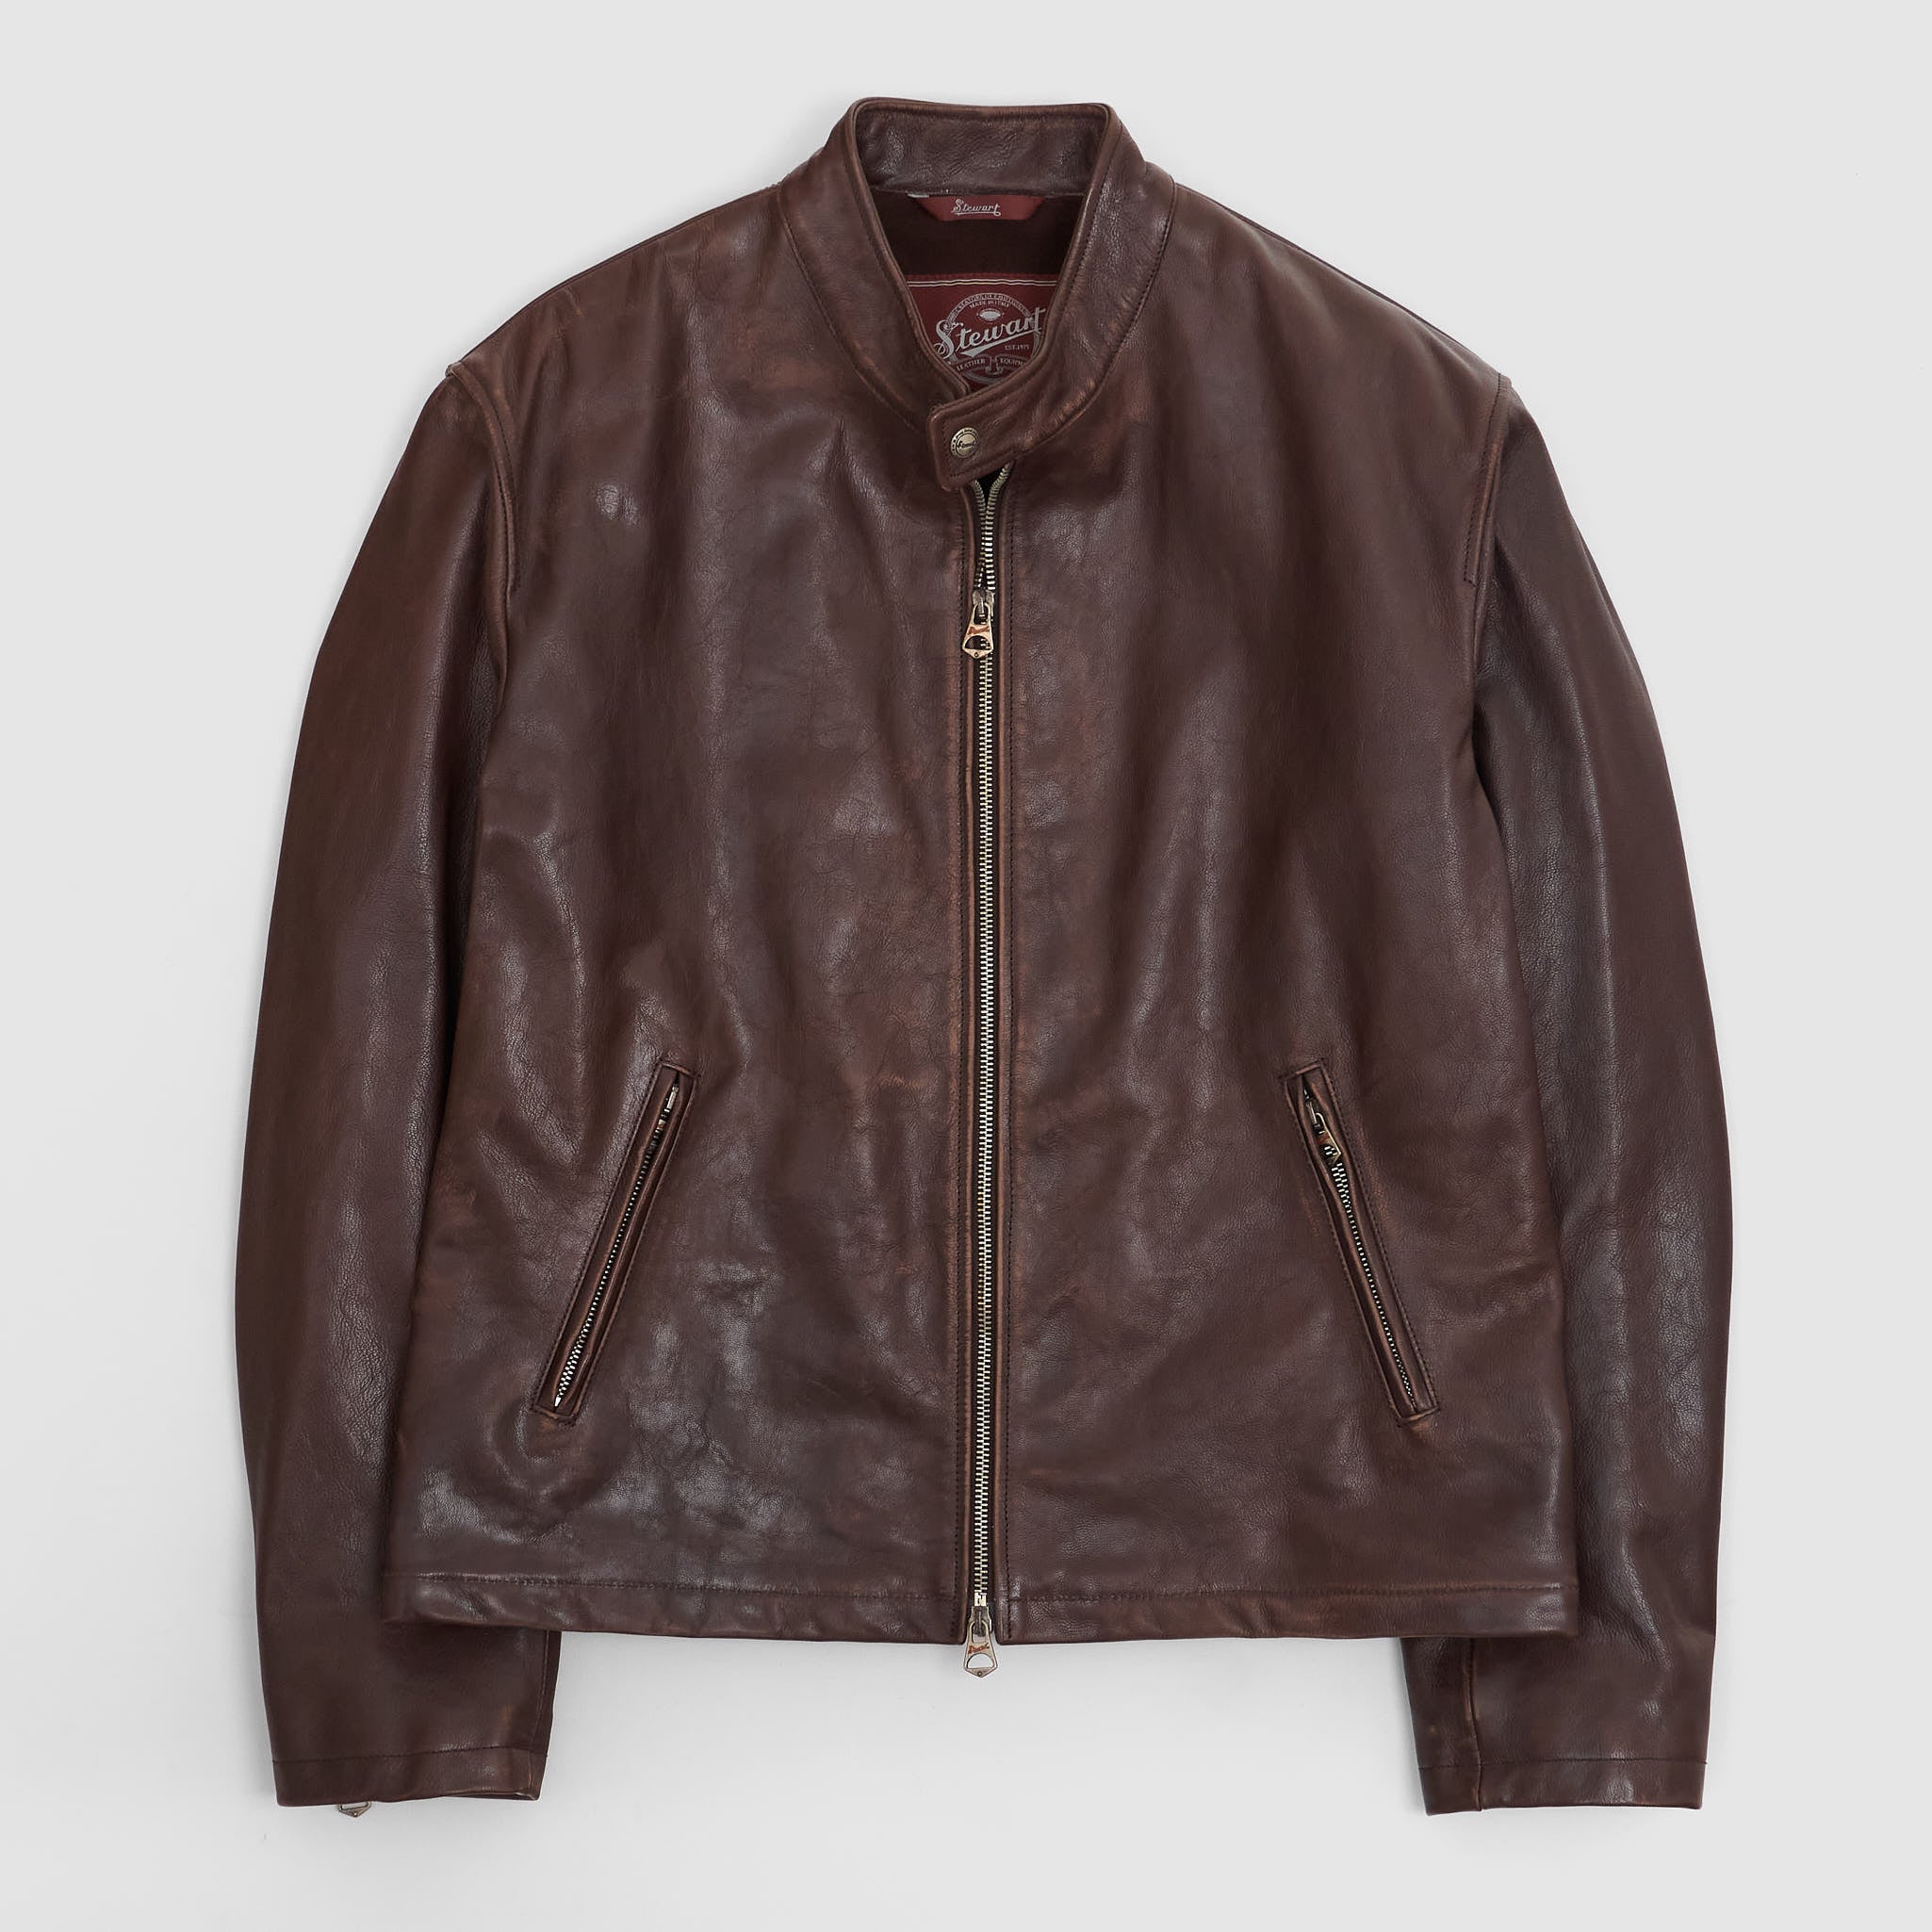 Stewart Cafe Racer Leather Jacket - DeeCee style